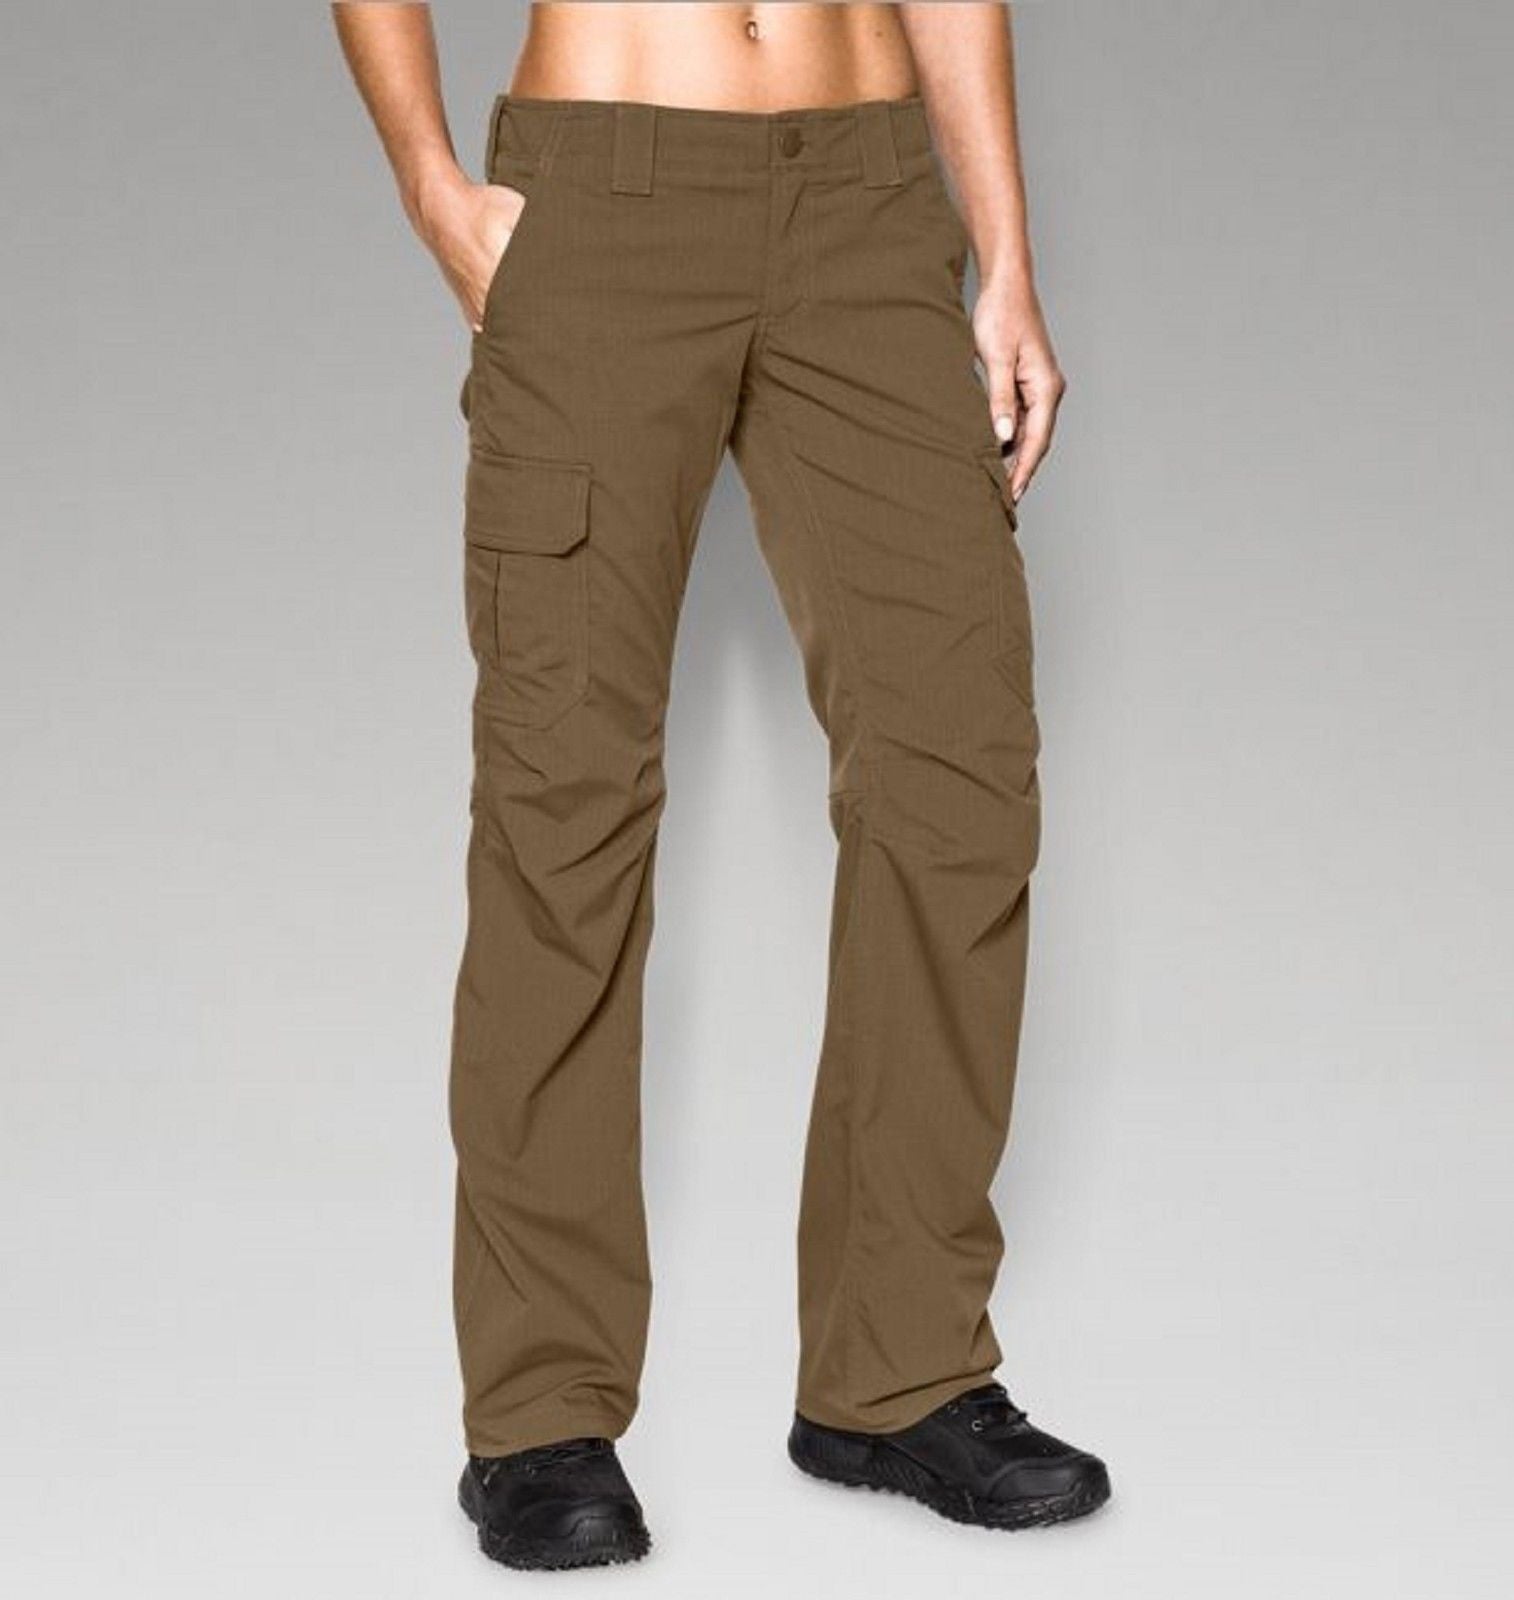 Under Armour Men's Tactical Patrol Pants Ii : : Clothing